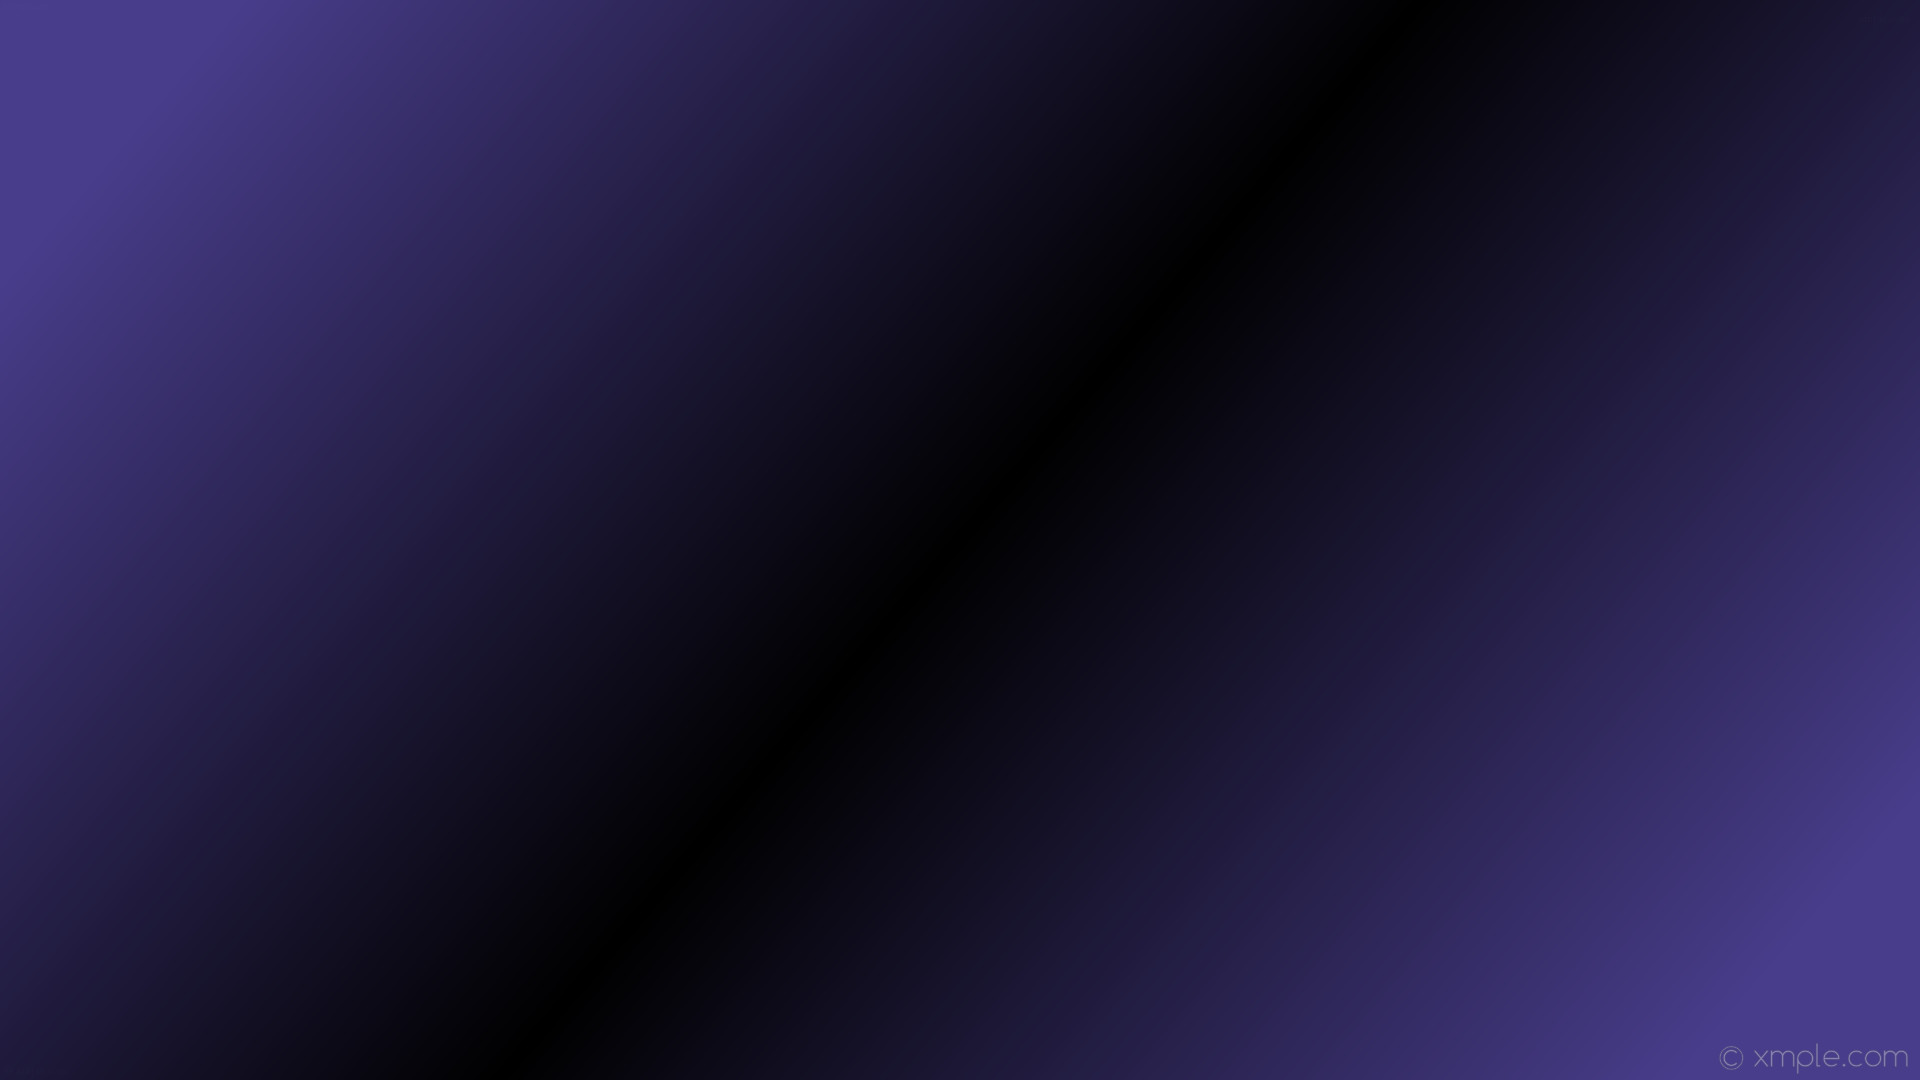 1920x1080 wallpaper black highlight purple linear gradient dark slate blue #483d8b  #000000 165Â° 50